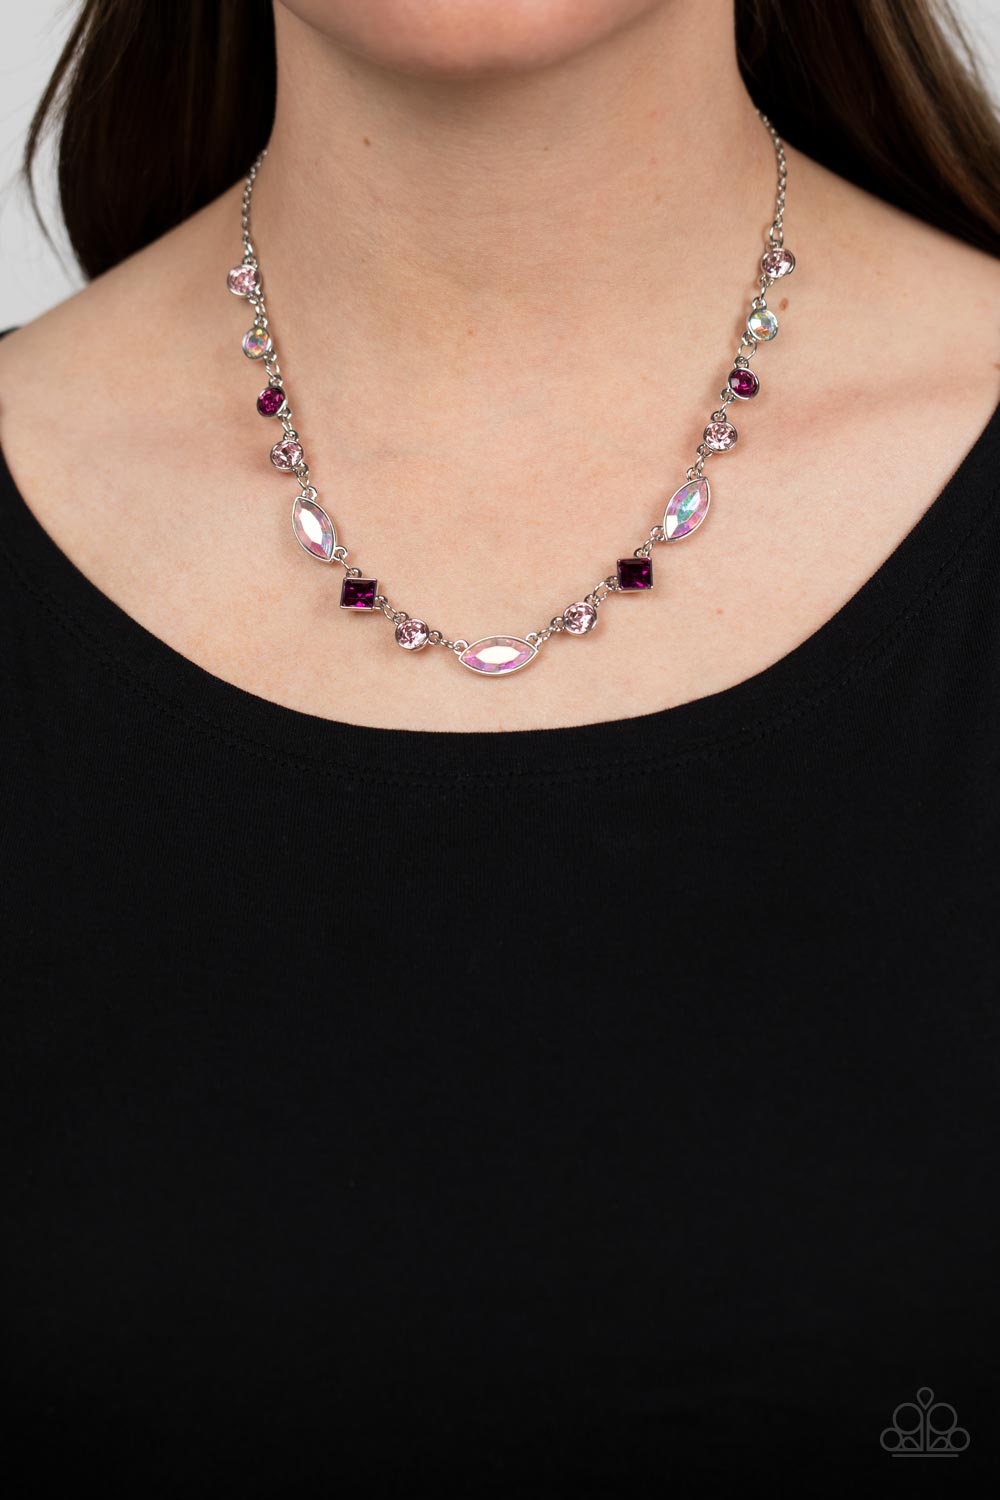 Irresistible HEIR-idescence - Pink Necklace Set - Princess Glam Shop